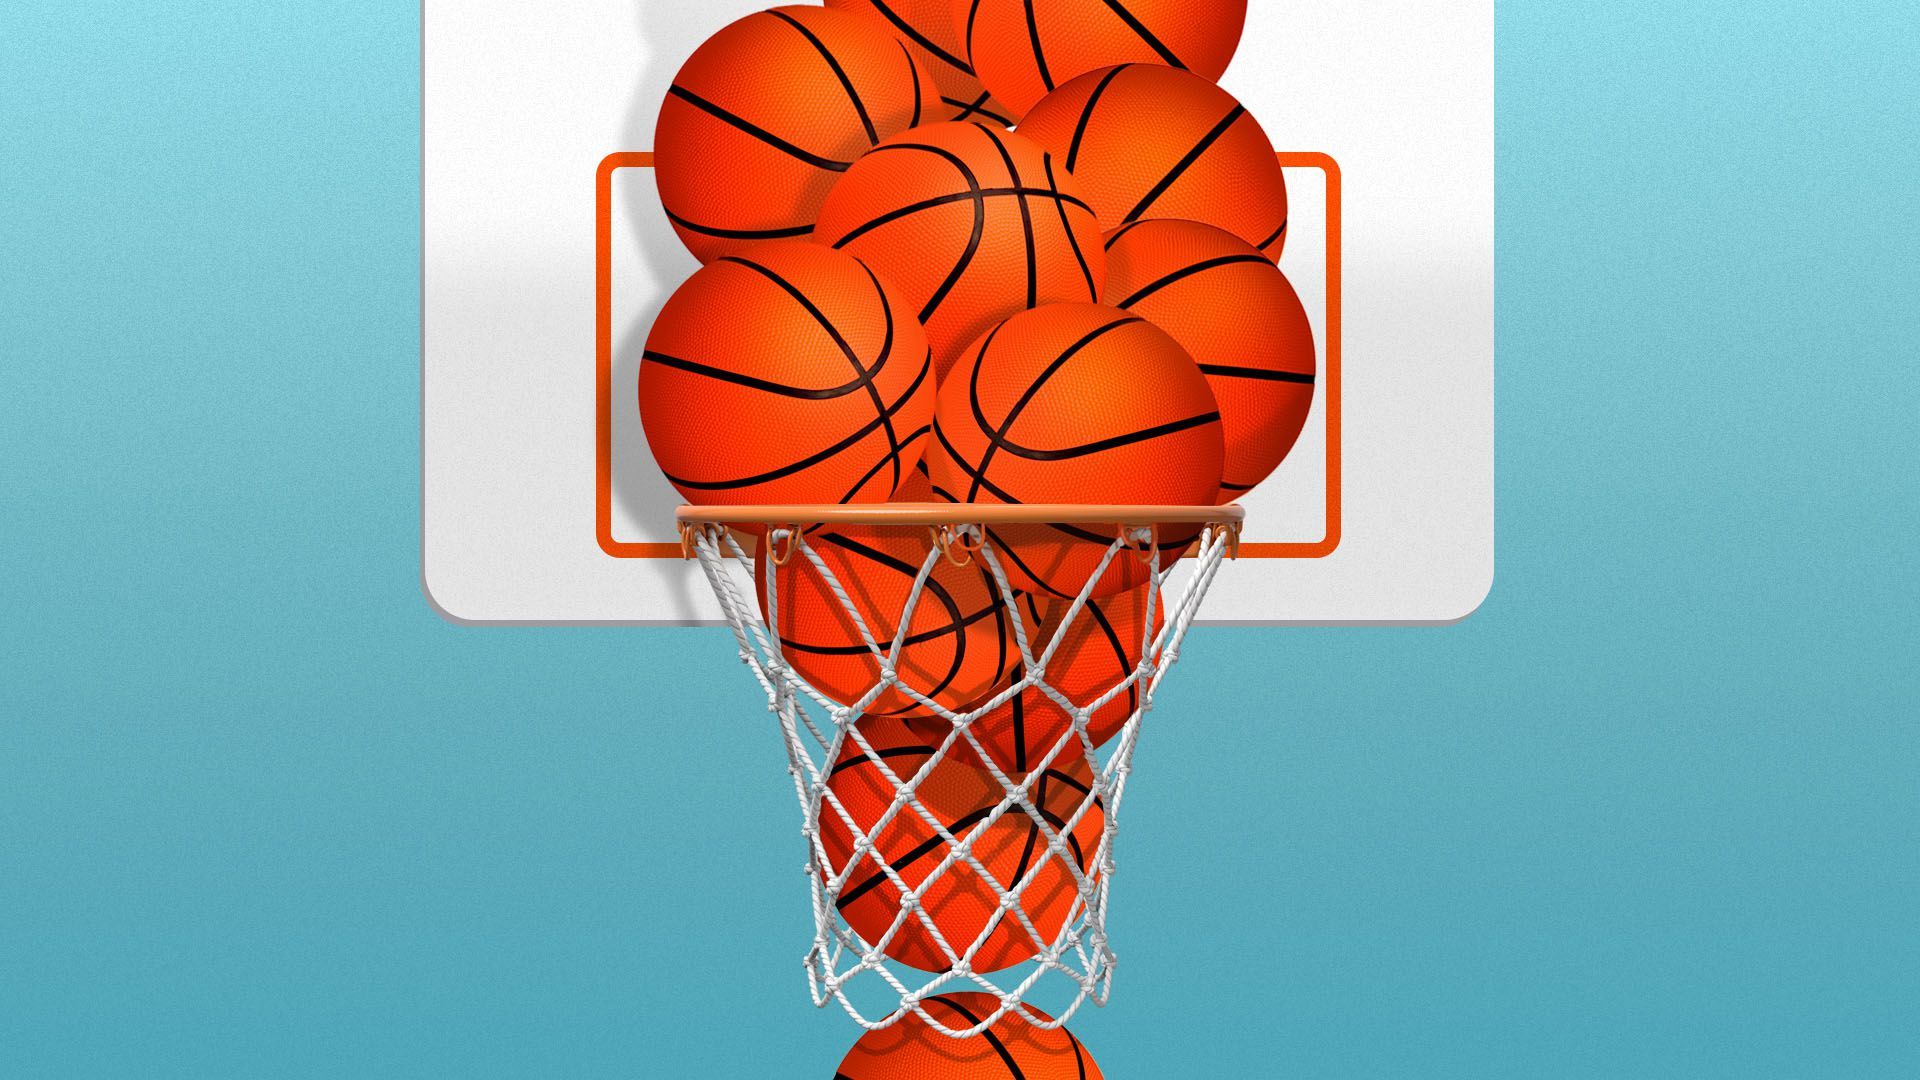 Illustration of a basketball hoop full of basketballs